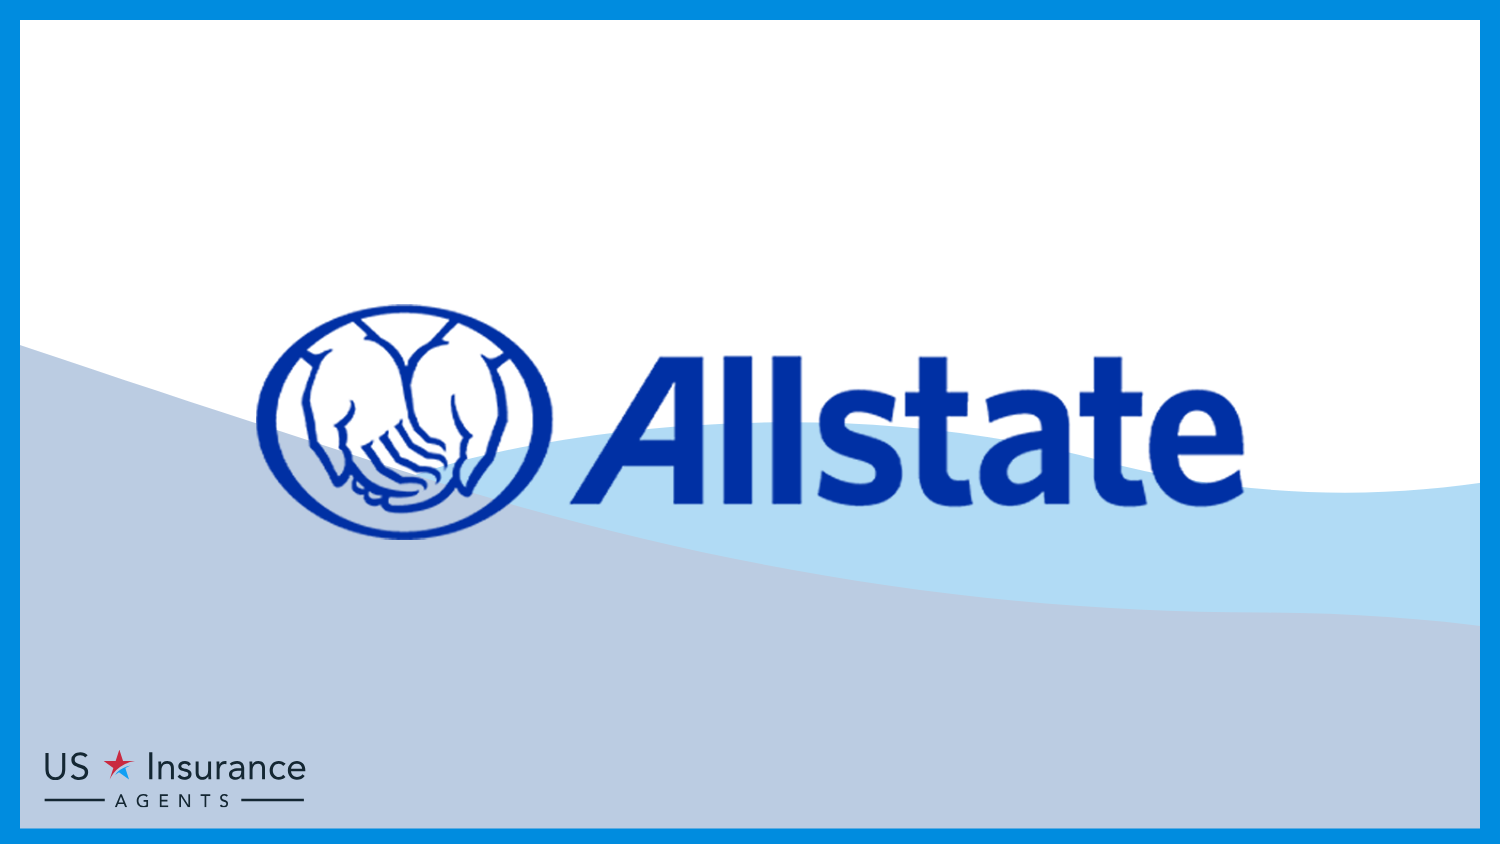 Best Car Insurance for Firefighters: Allstate